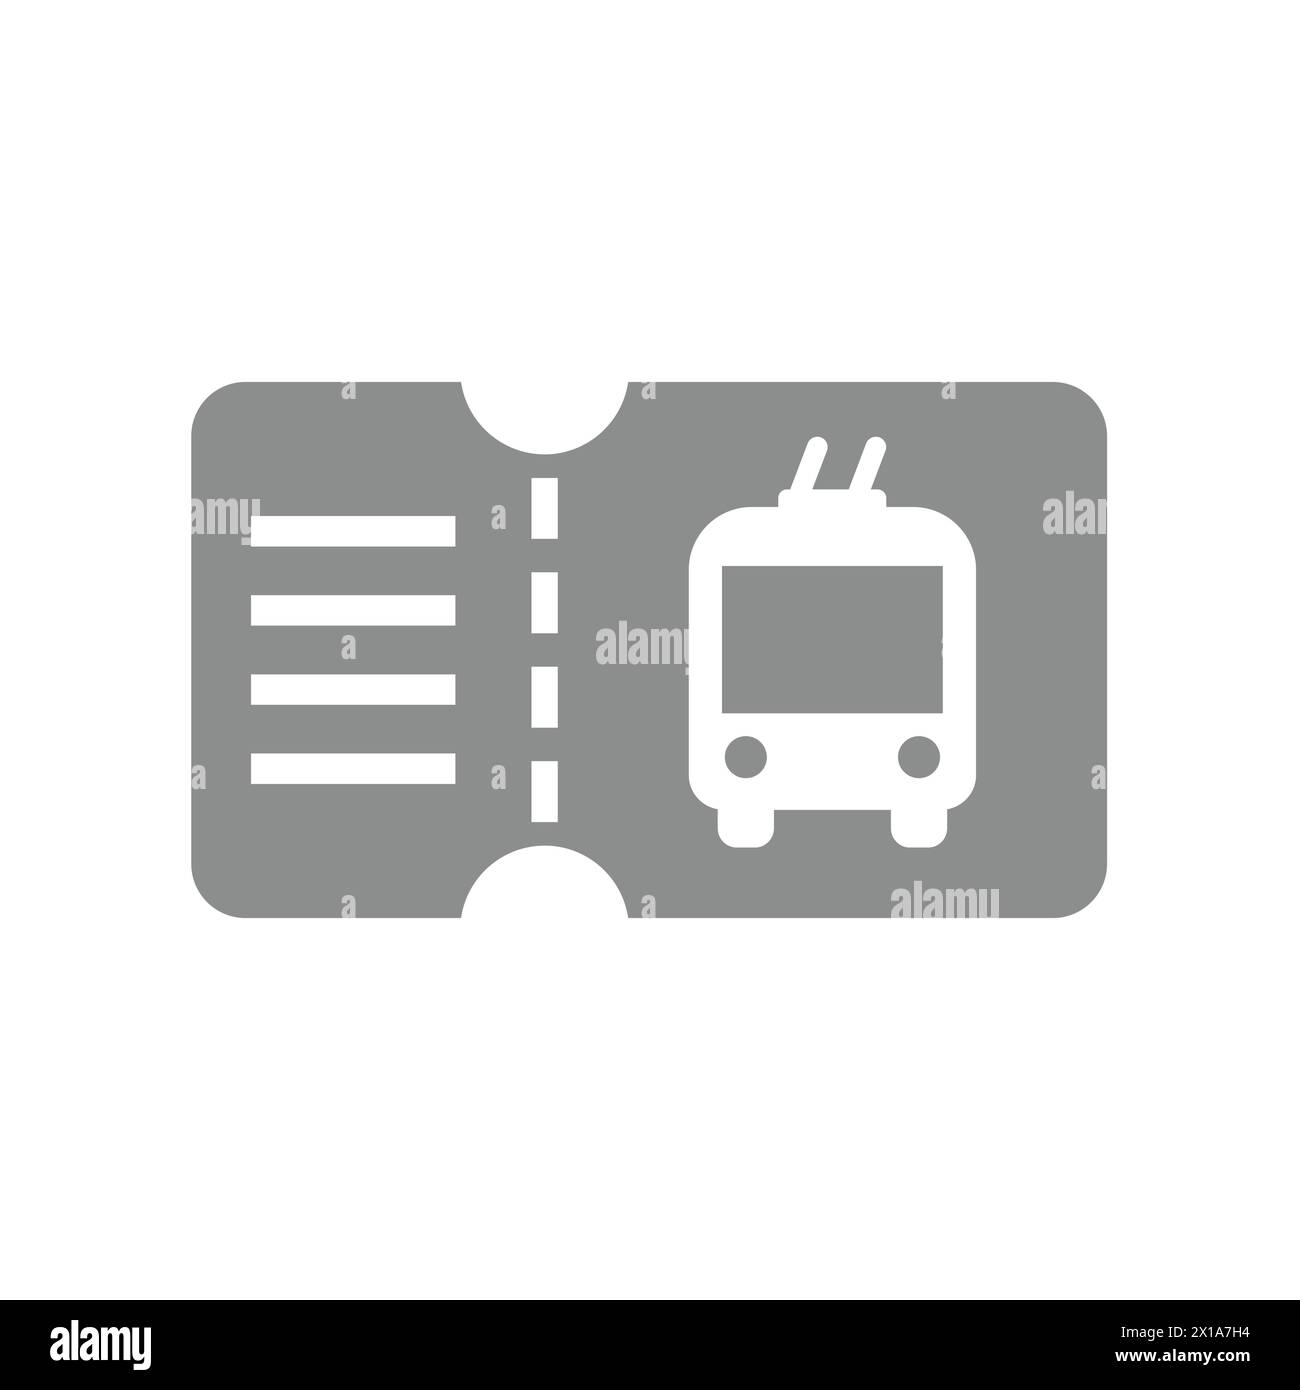 Tram or trolley ticket vector. Tramcar, railcar transport icon. Stock Vector